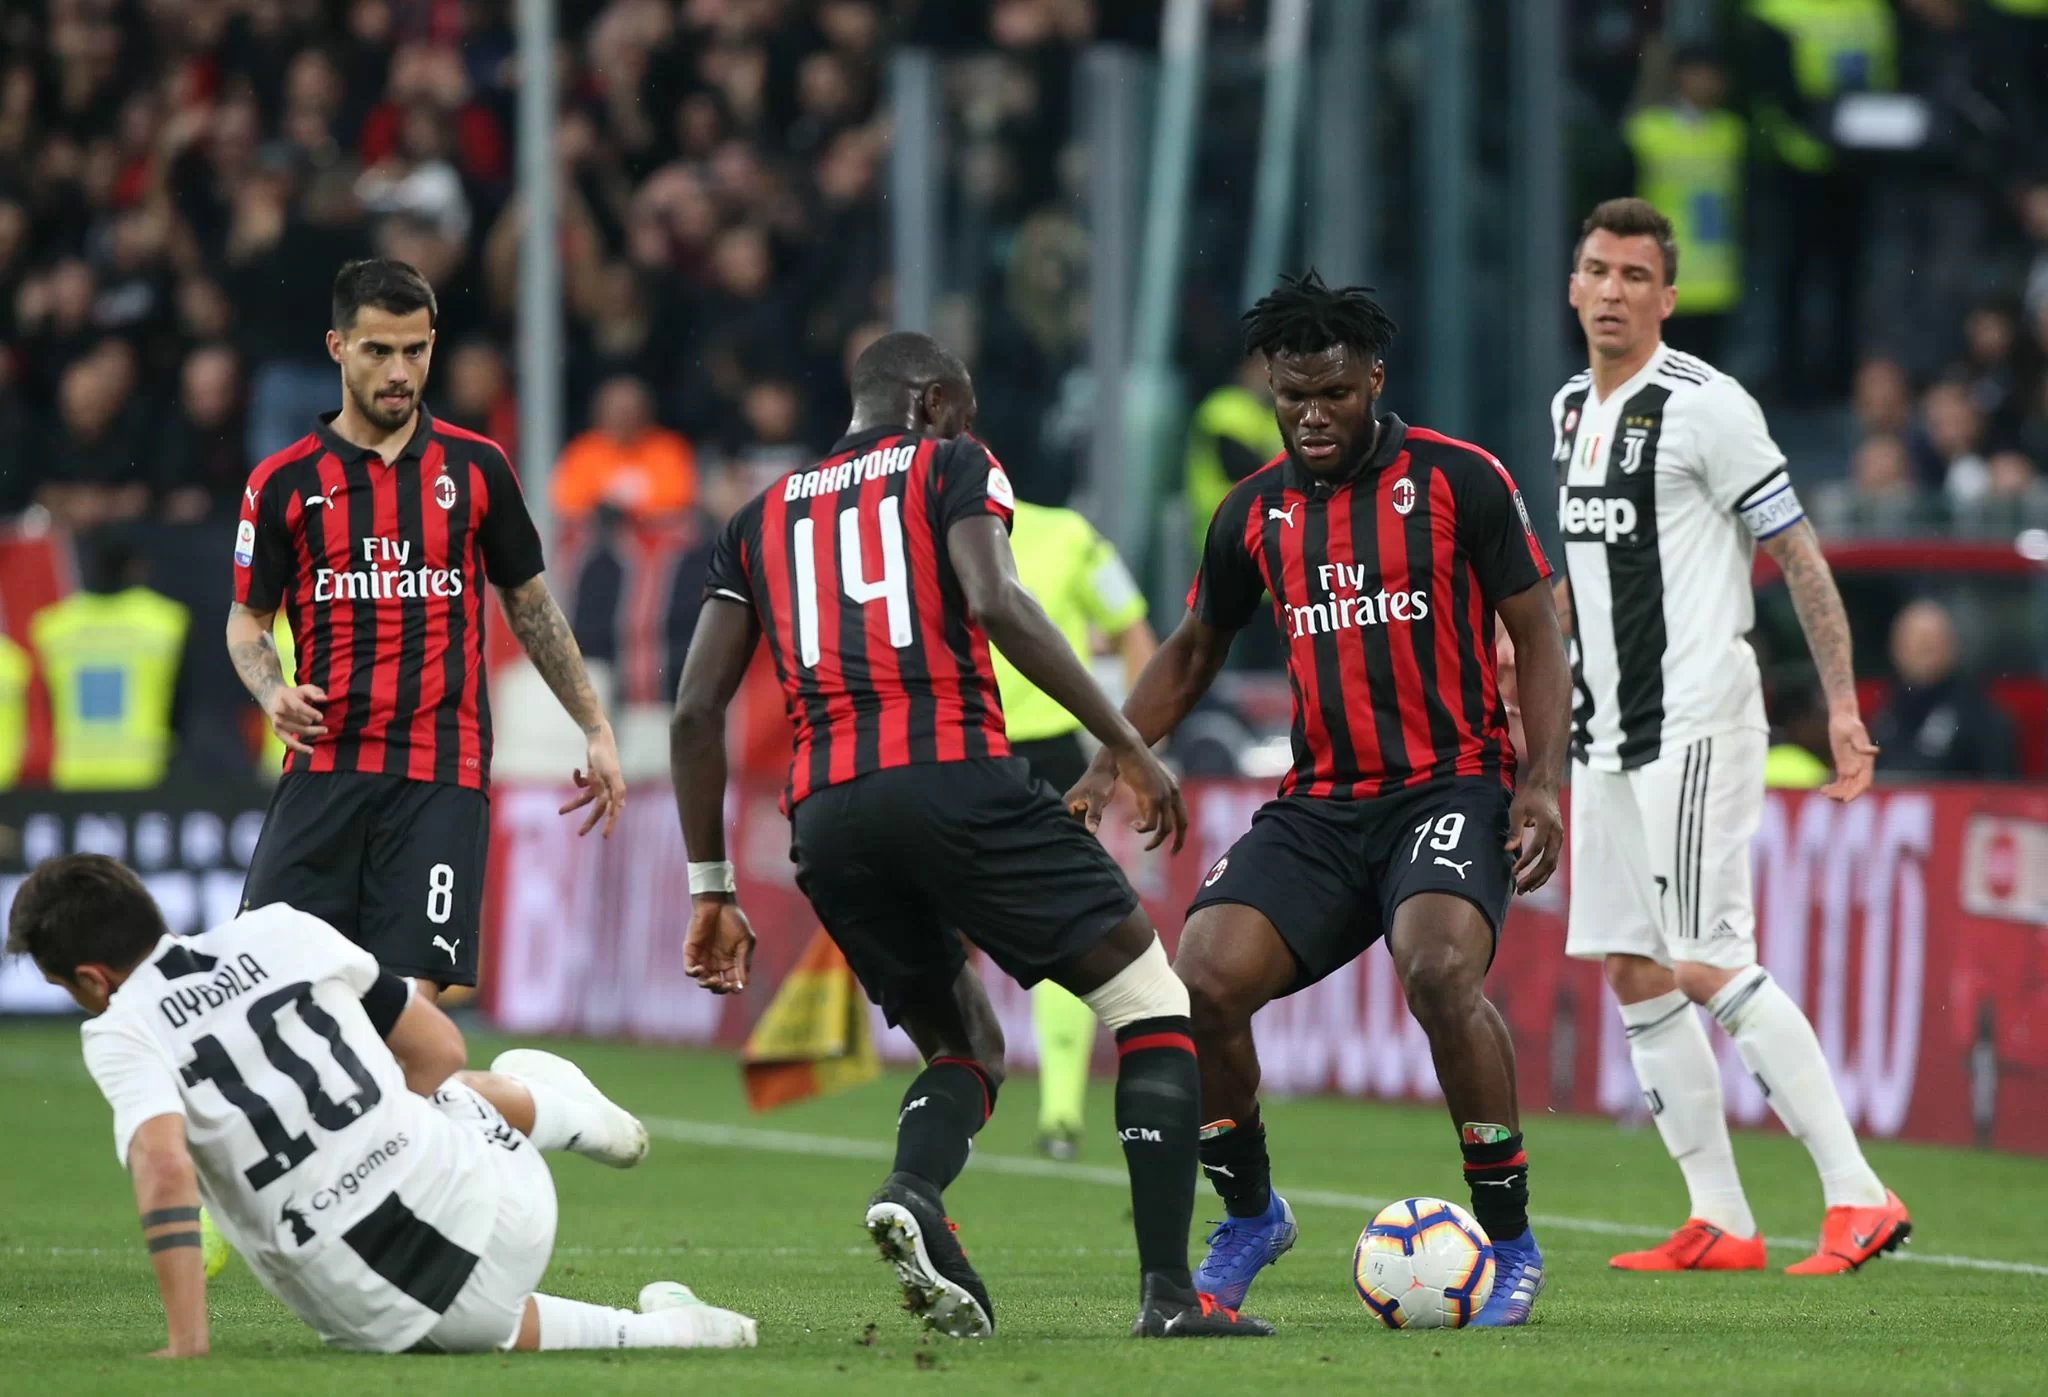 Calciomercato Milan – Il Monaco su Kessié, se salta l’alternativa è Bakayoko